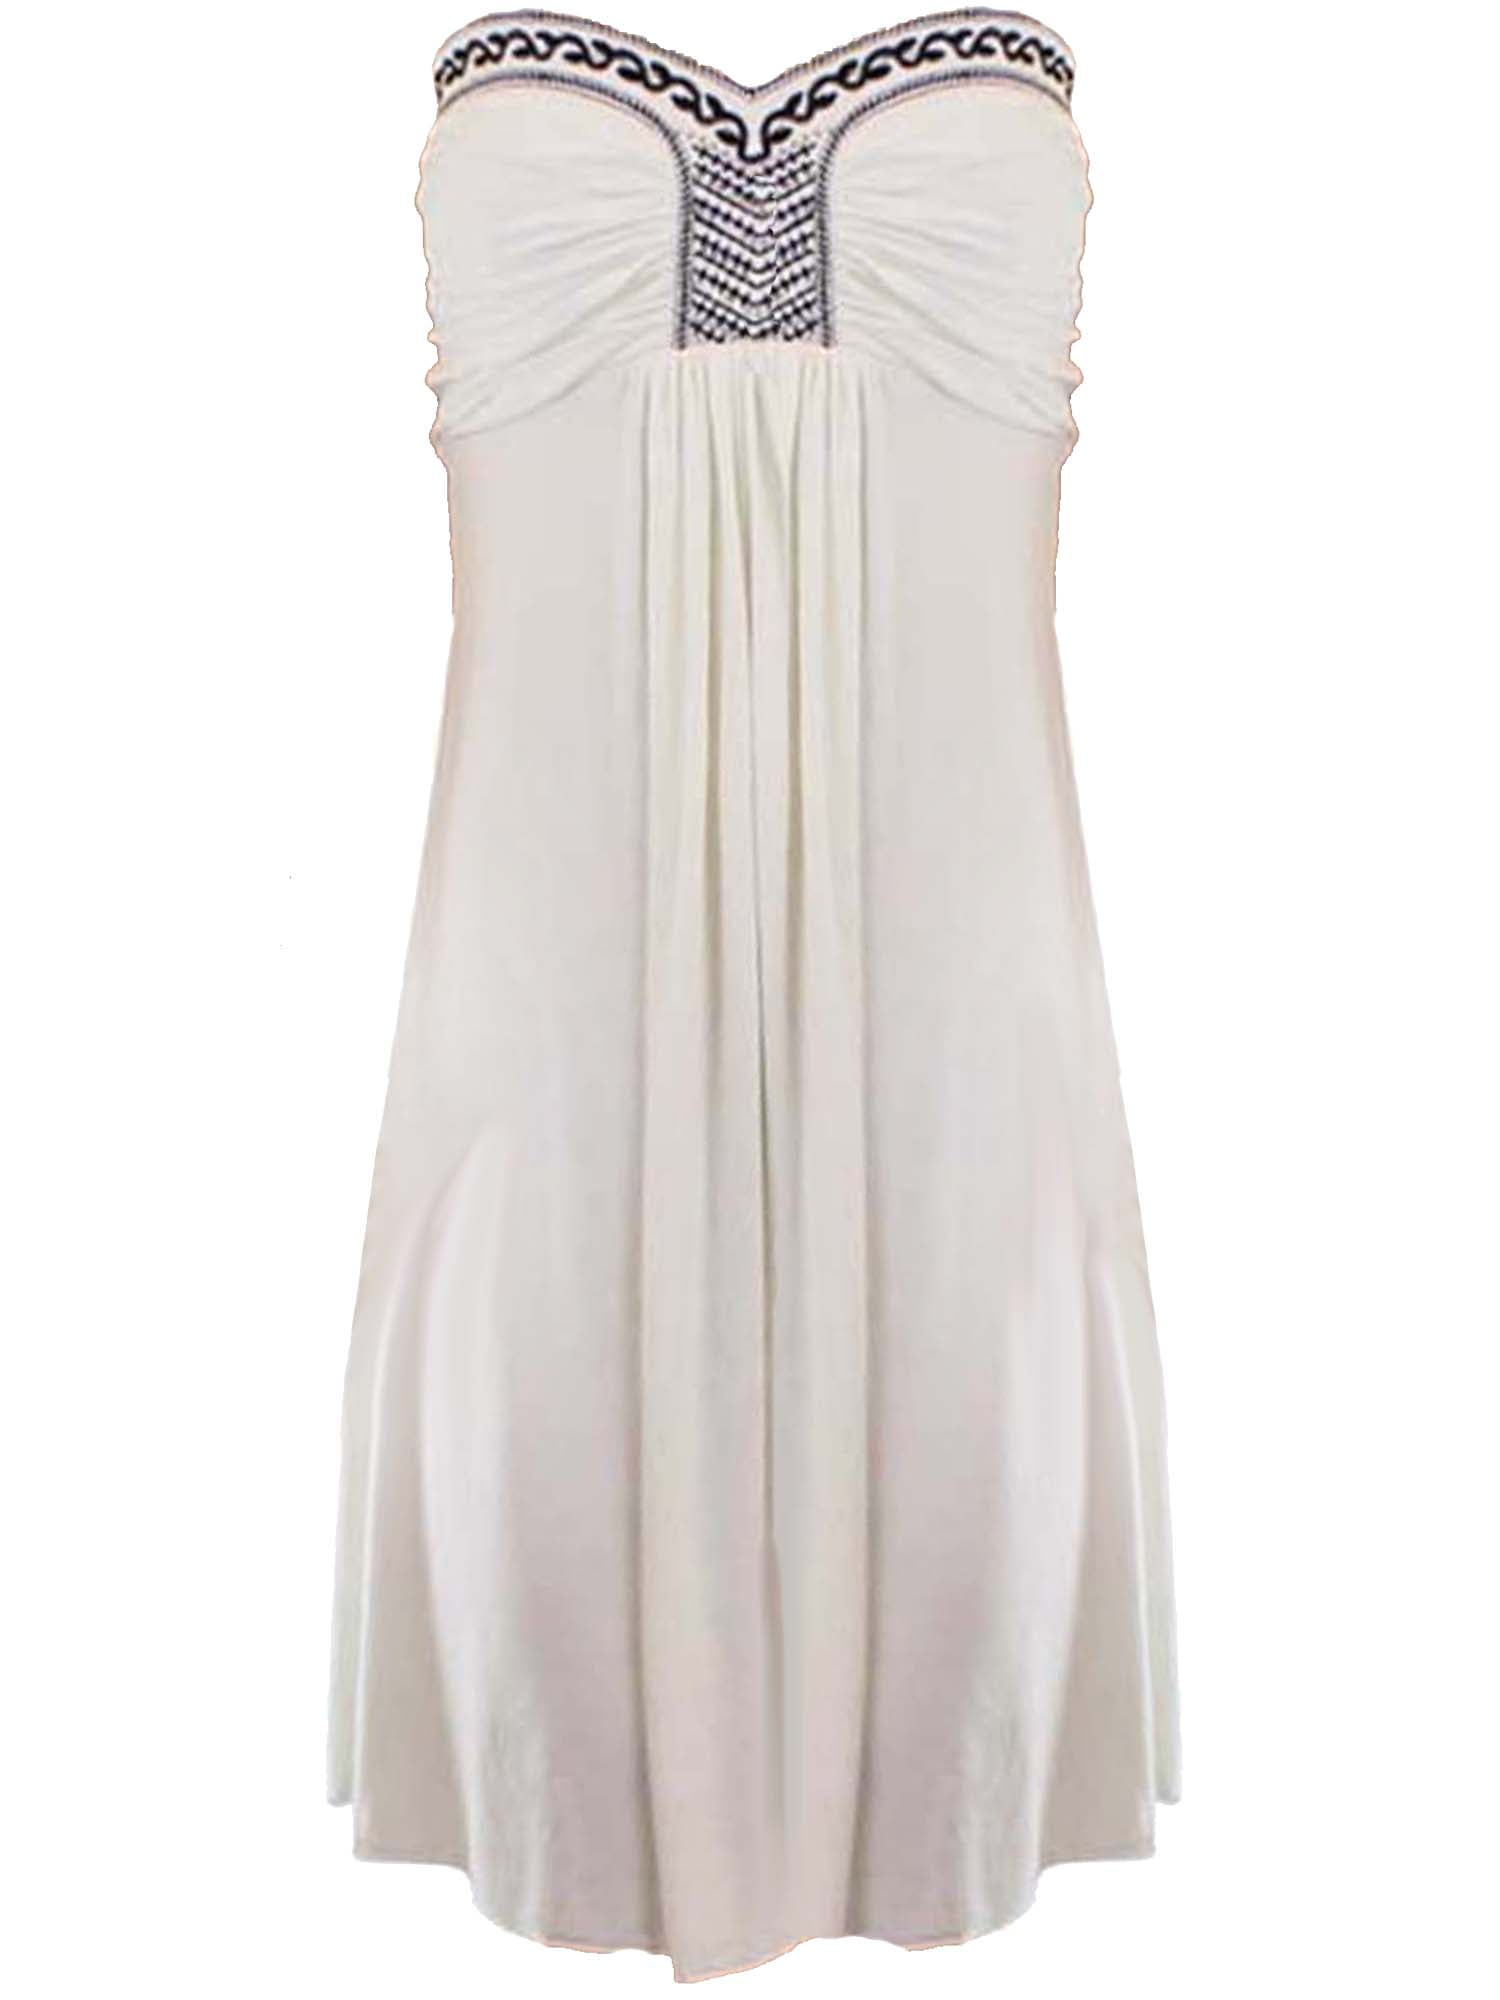 white strapless beach dress